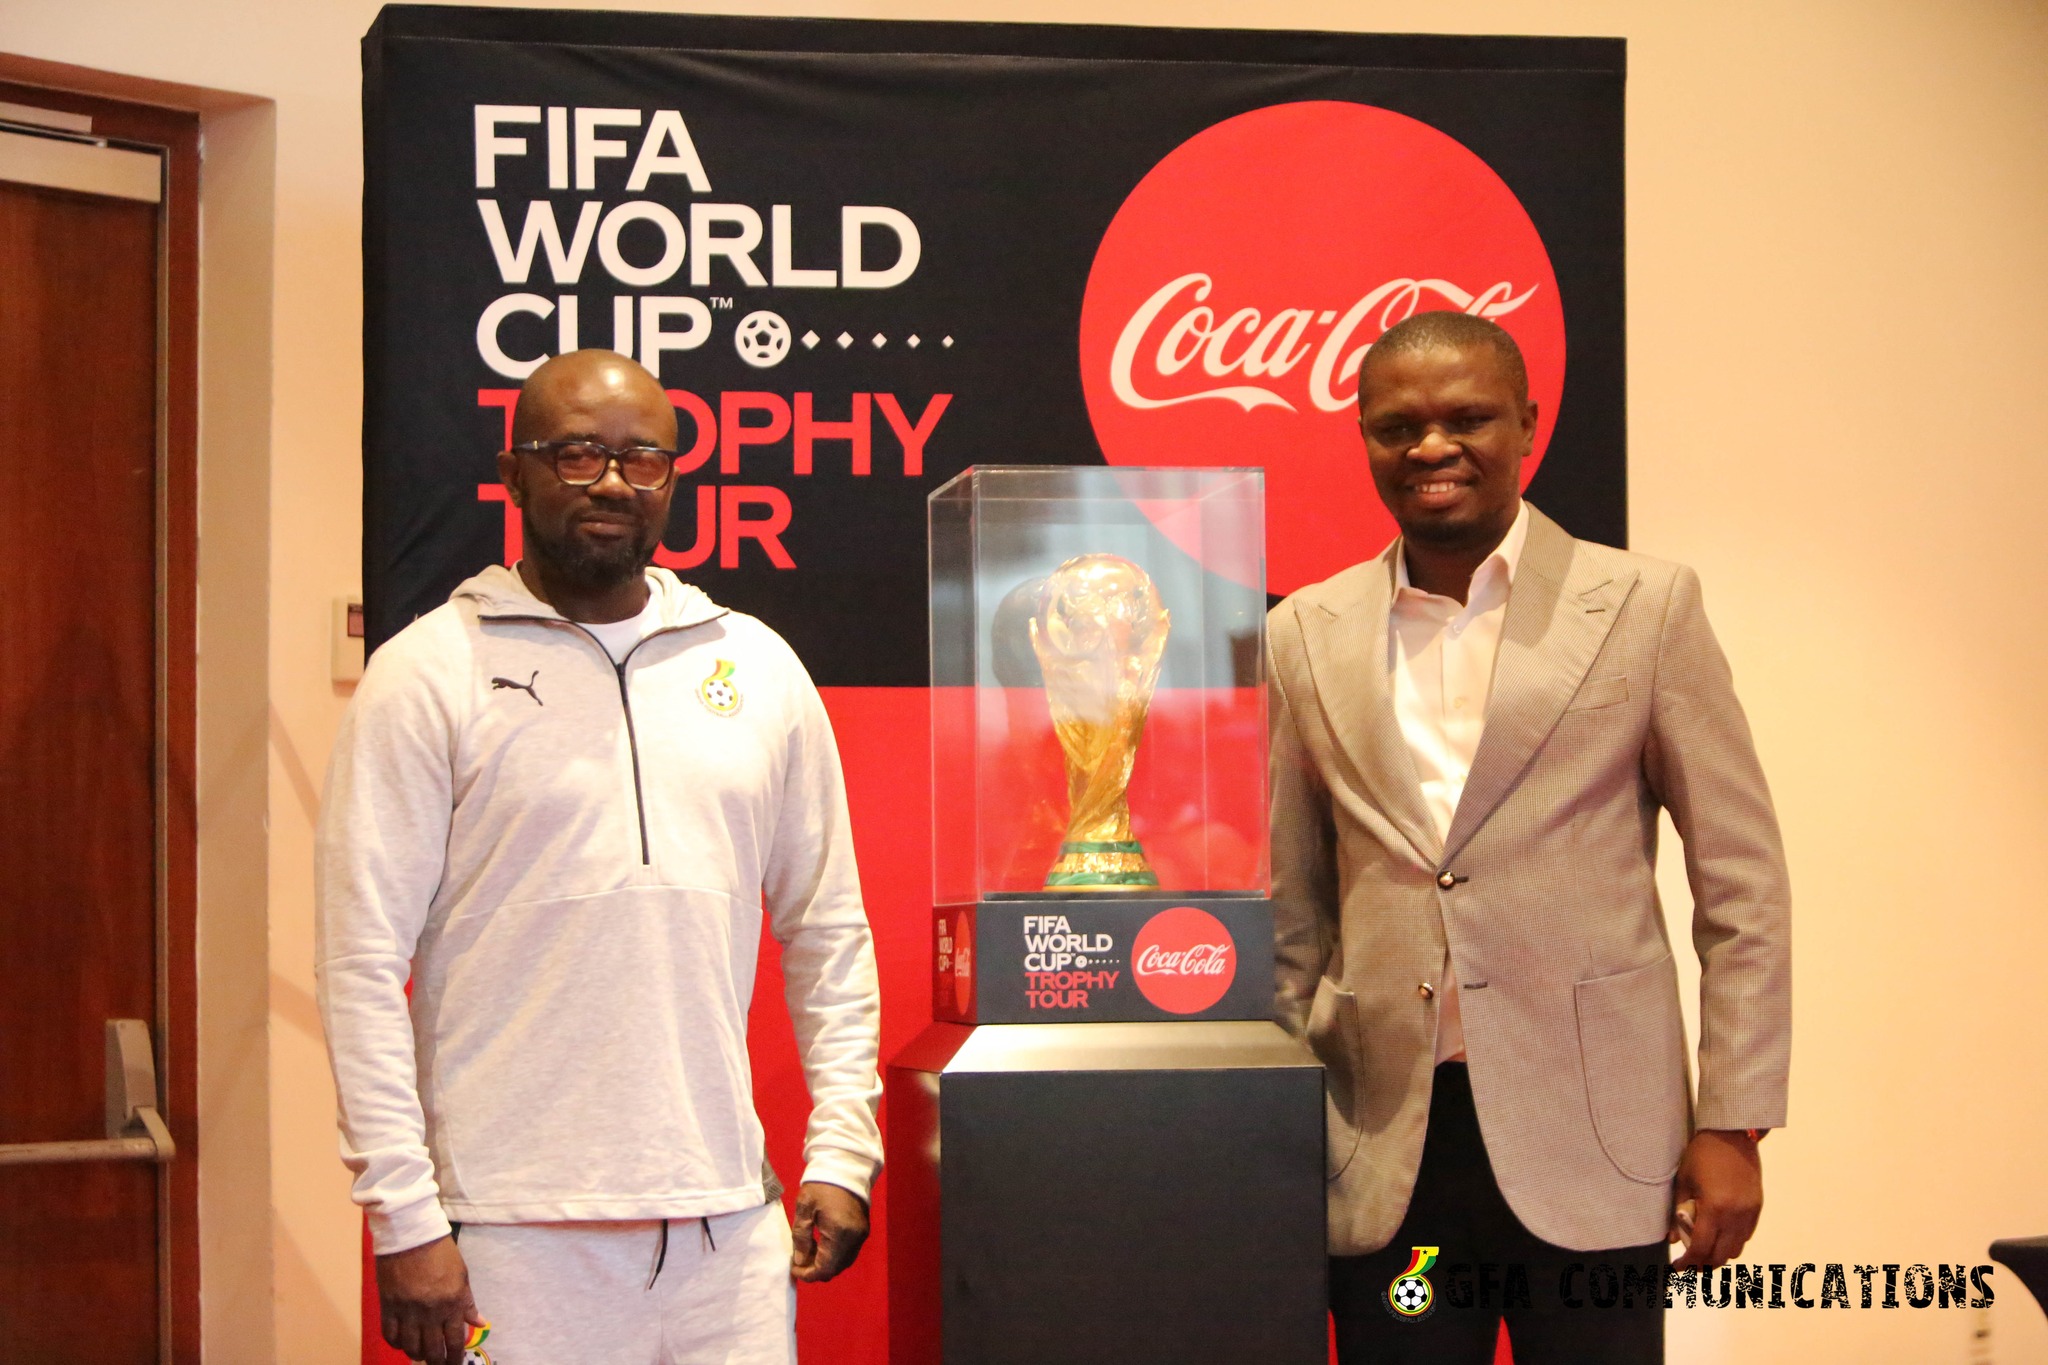 Fifa World Cup trophy, Ghana, Newcenta, football, Coca Cola, Ghana Football Association. FIFA trophy in Ghana, 2022 World Cup trophy, Qatar 2022, trophy tour